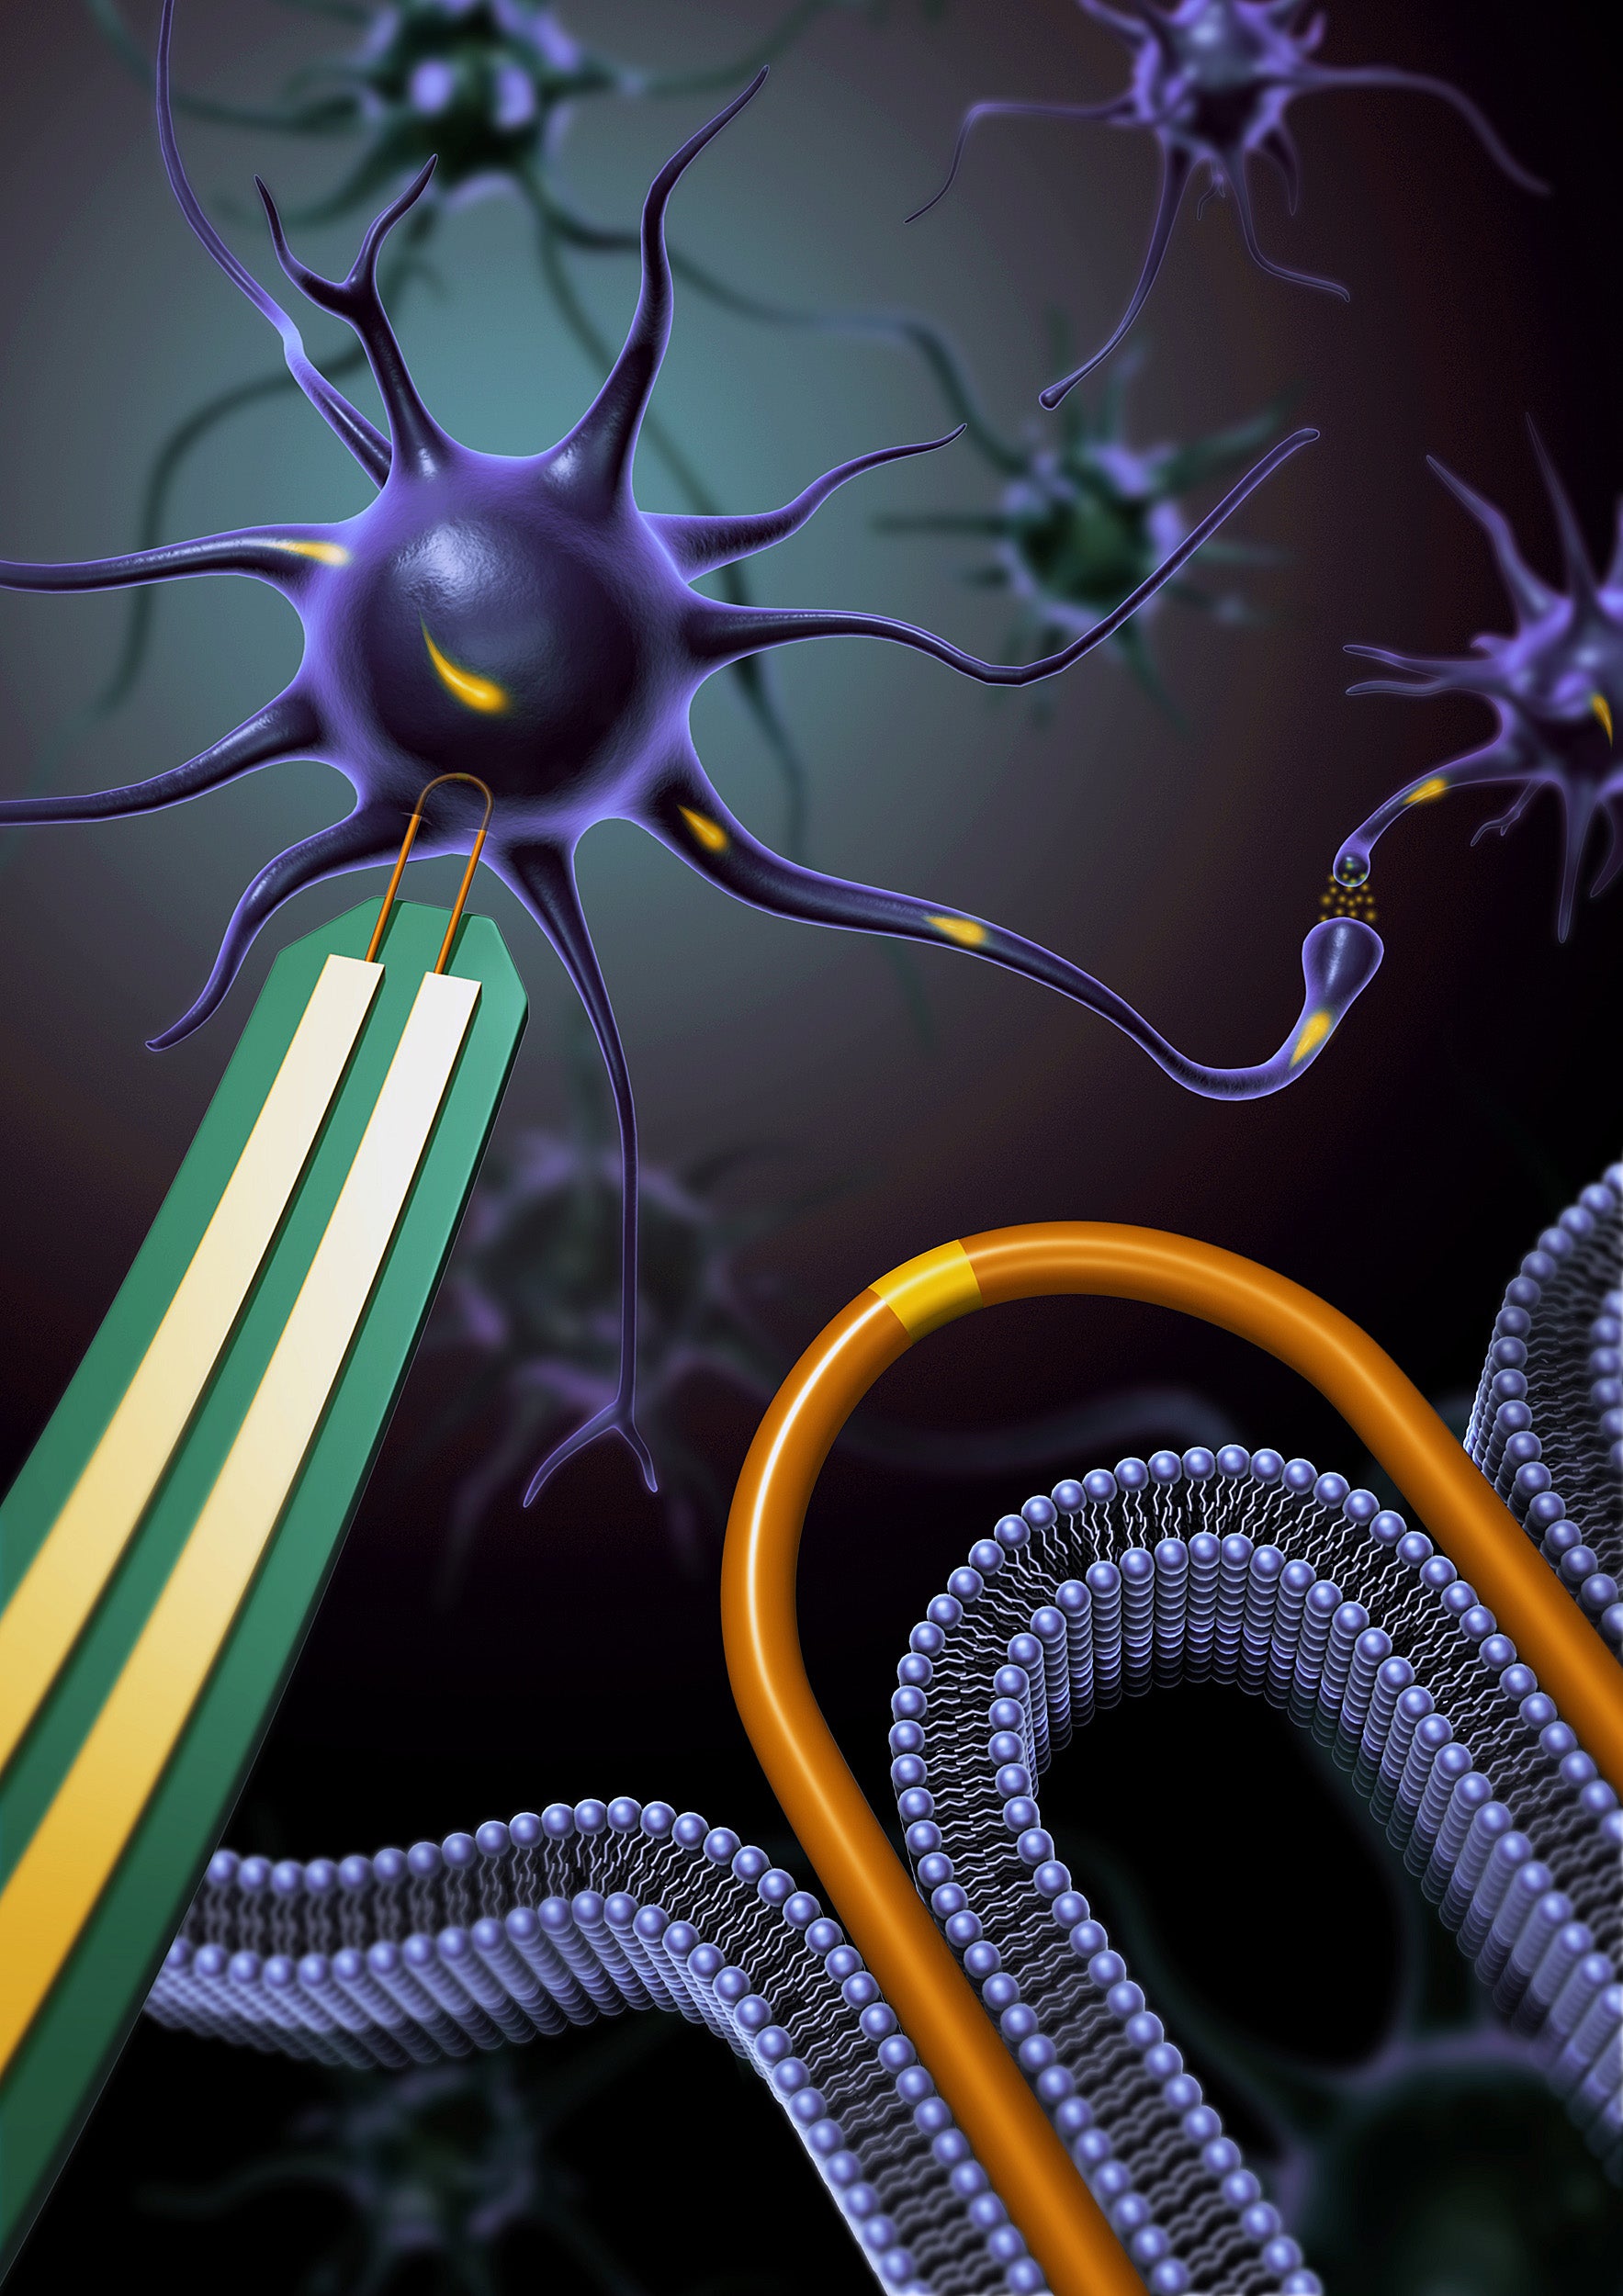 A U-shaped nanowire pierces the membrane of a neuron